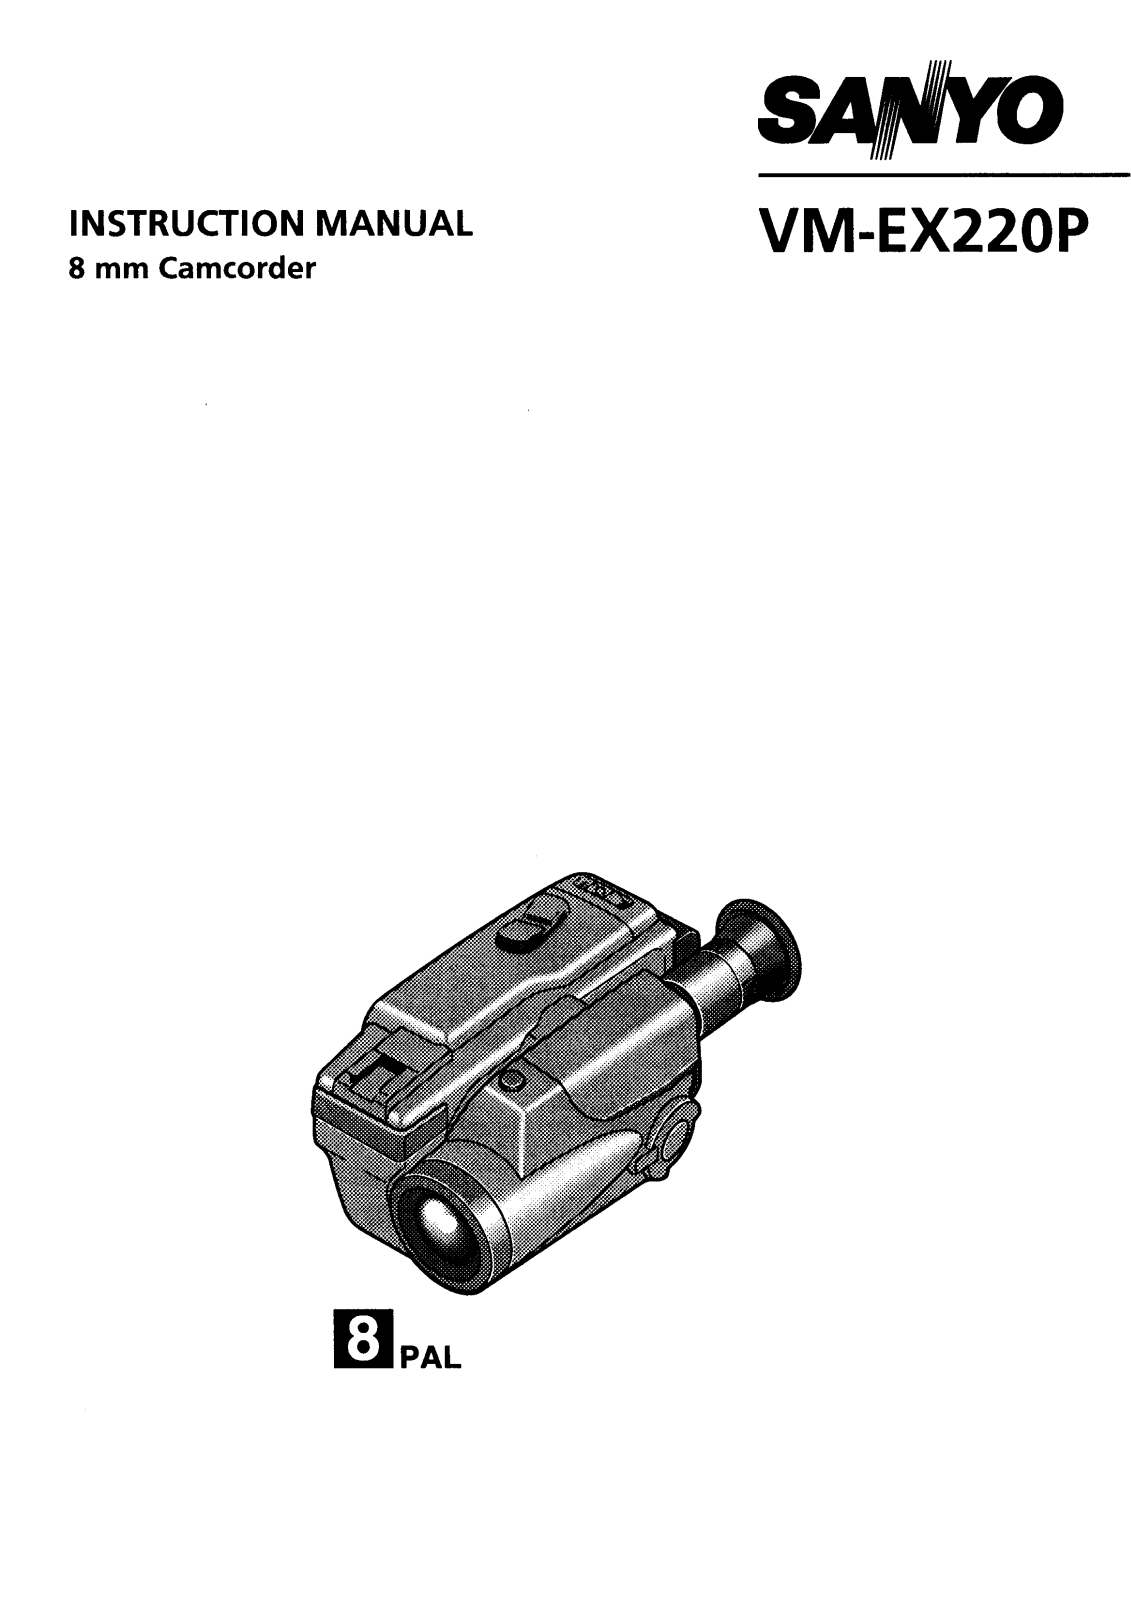 SANYO VM-EX220P User Manual